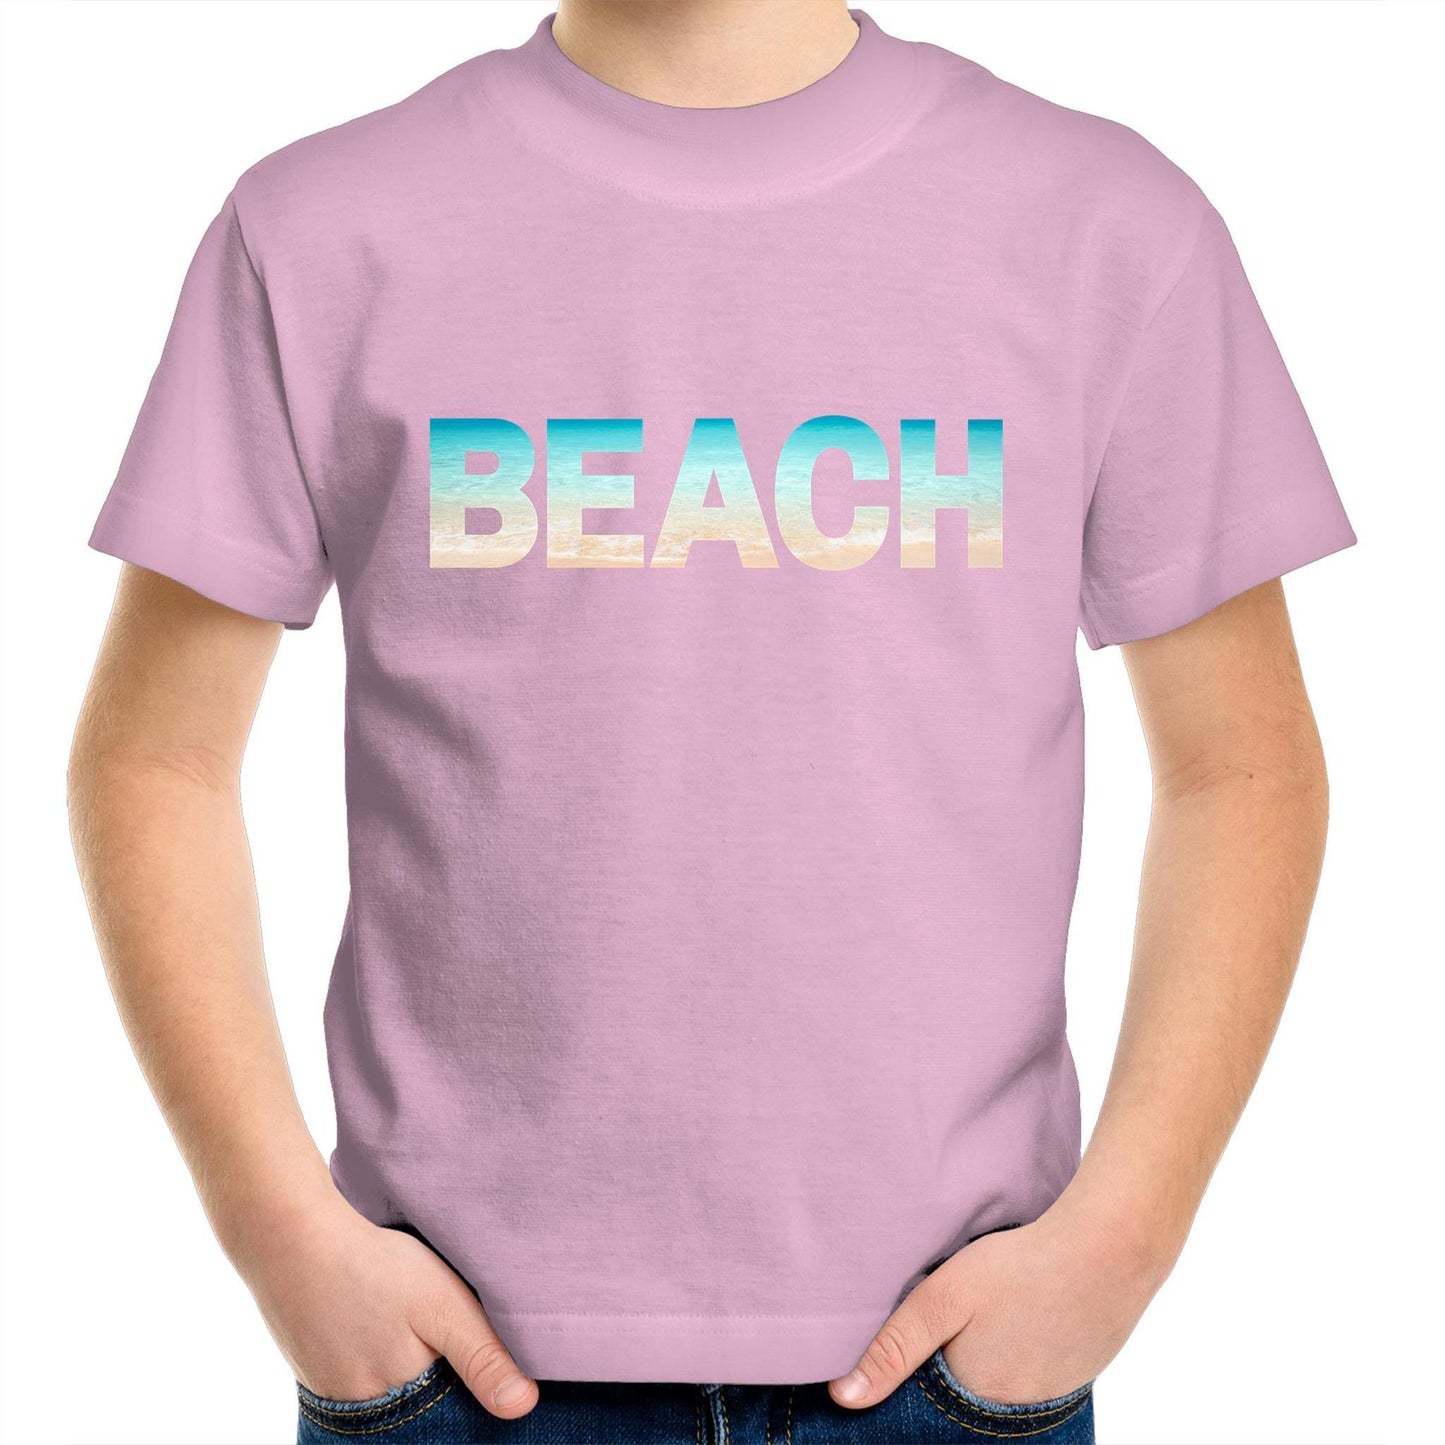 Beach - Kids Youth Crew T-Shirt Pink Kids Youth T-shirt Summer